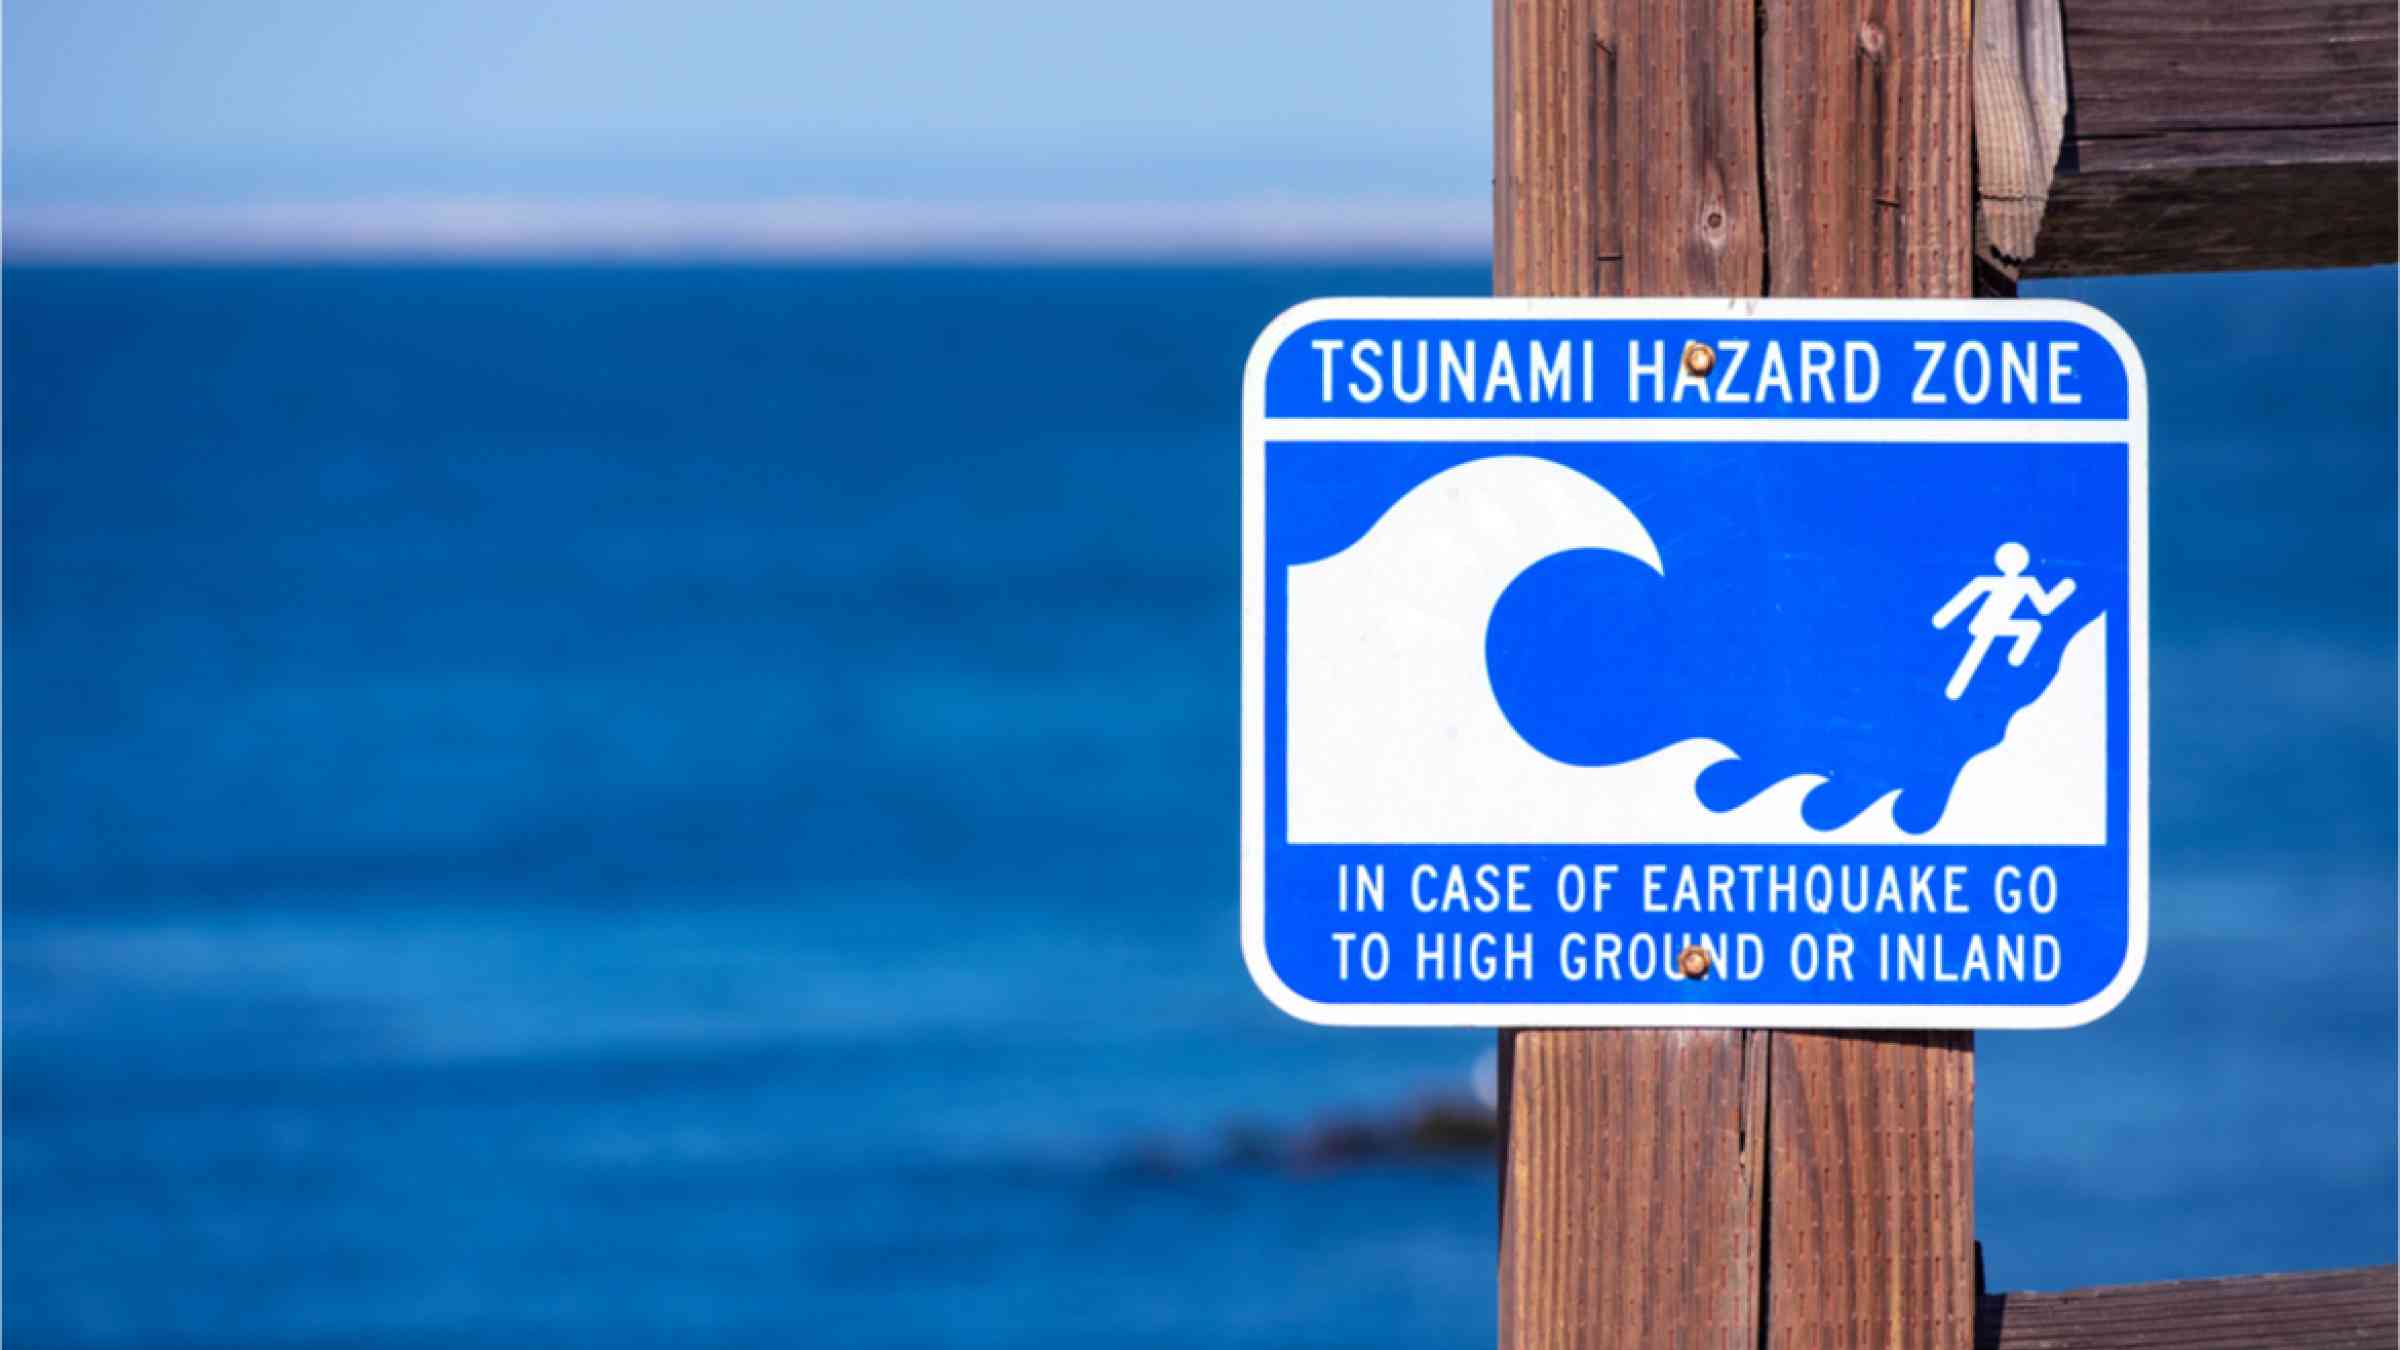 The Pacific Coast Tsunami Hazard Zone warning sign warns the public of potential dangers following an earthquake.